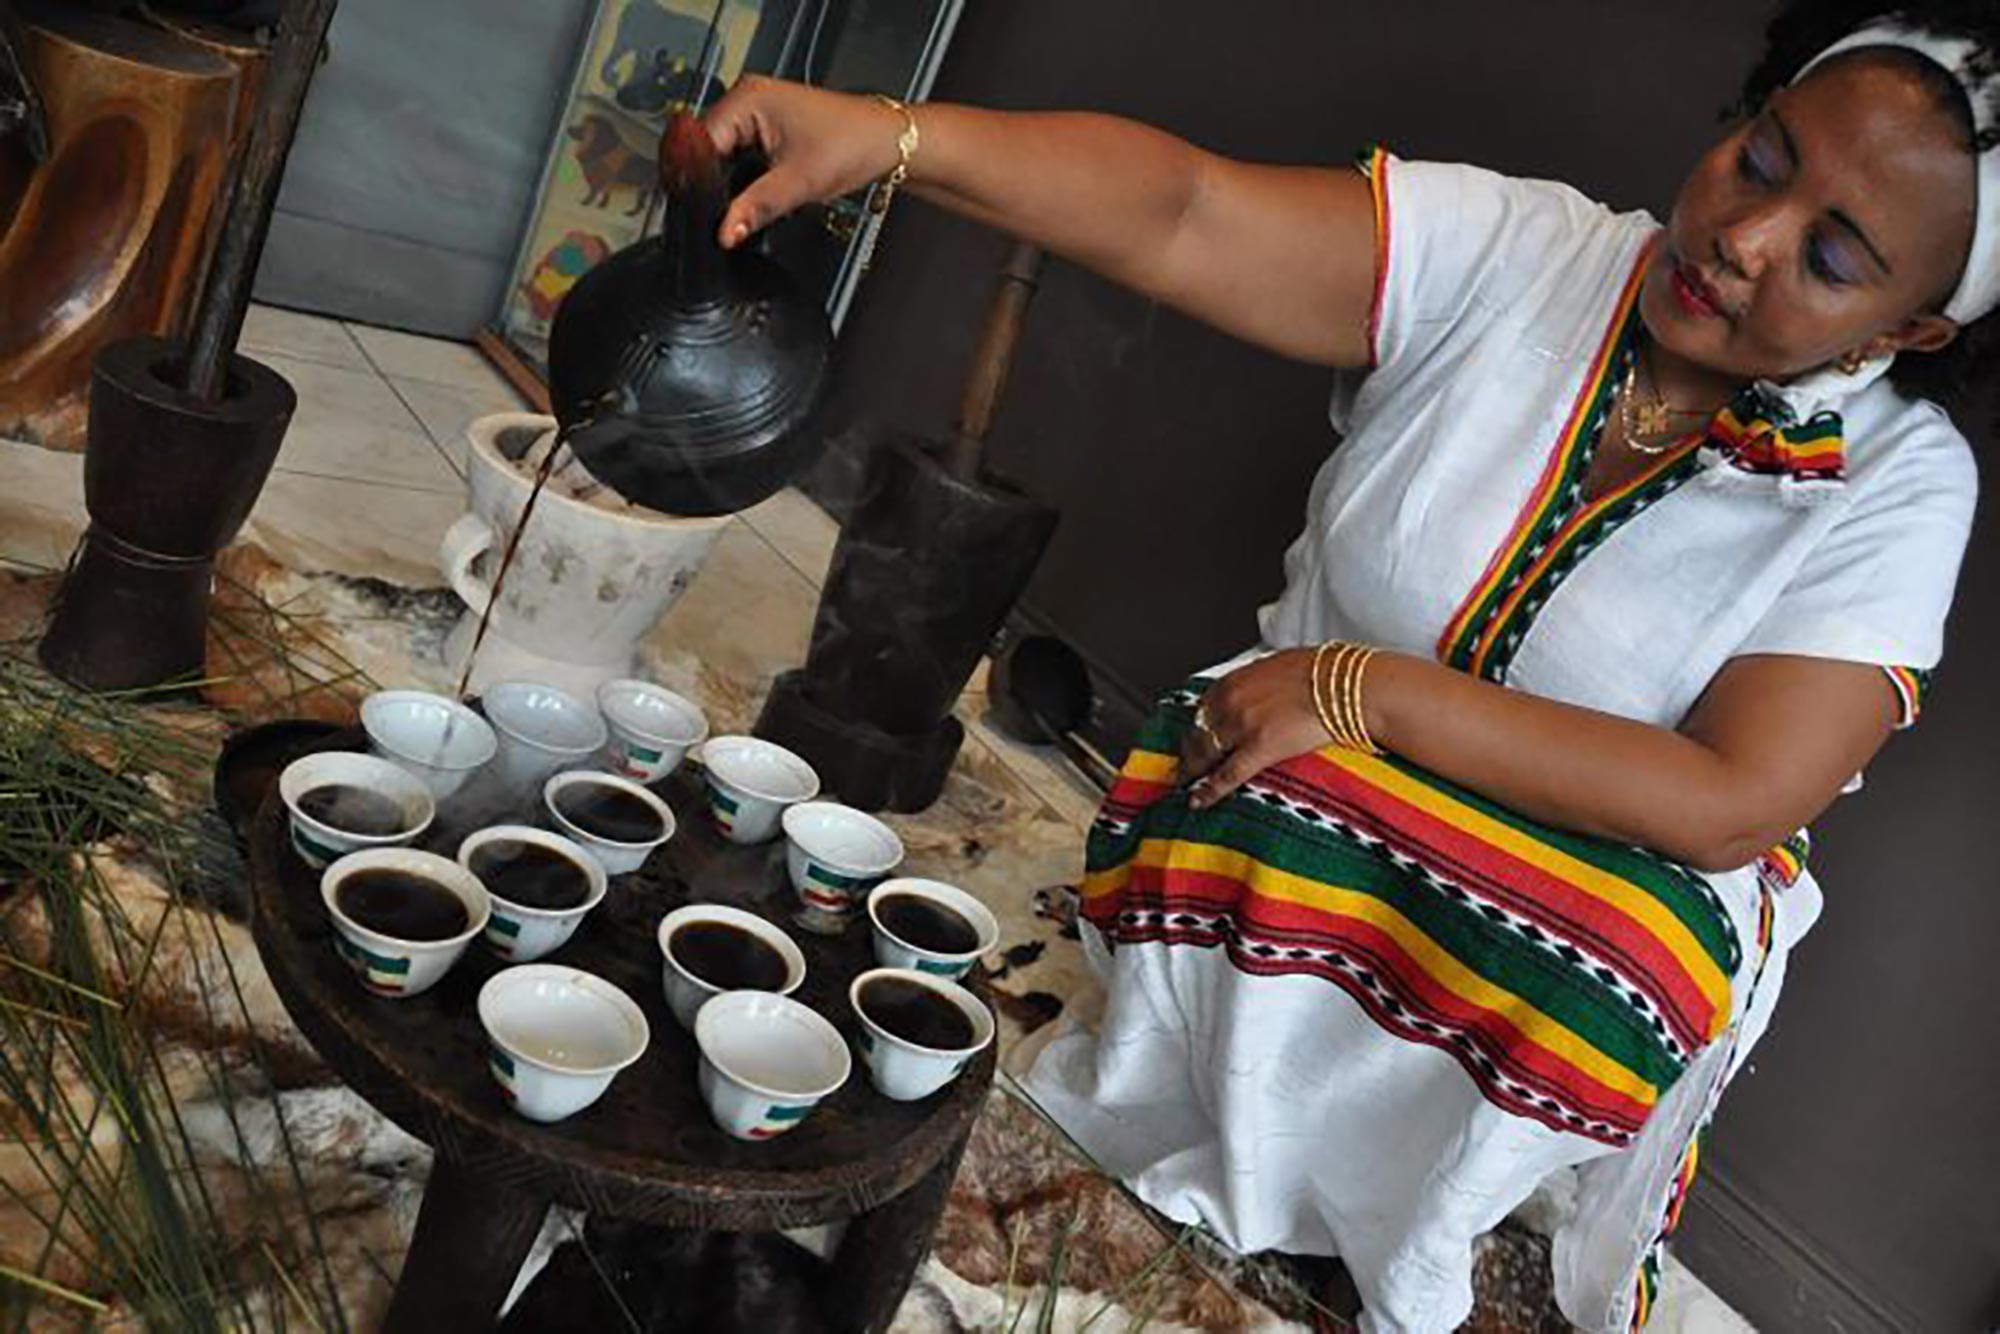 Ethiopian Coffee Tray Cloche